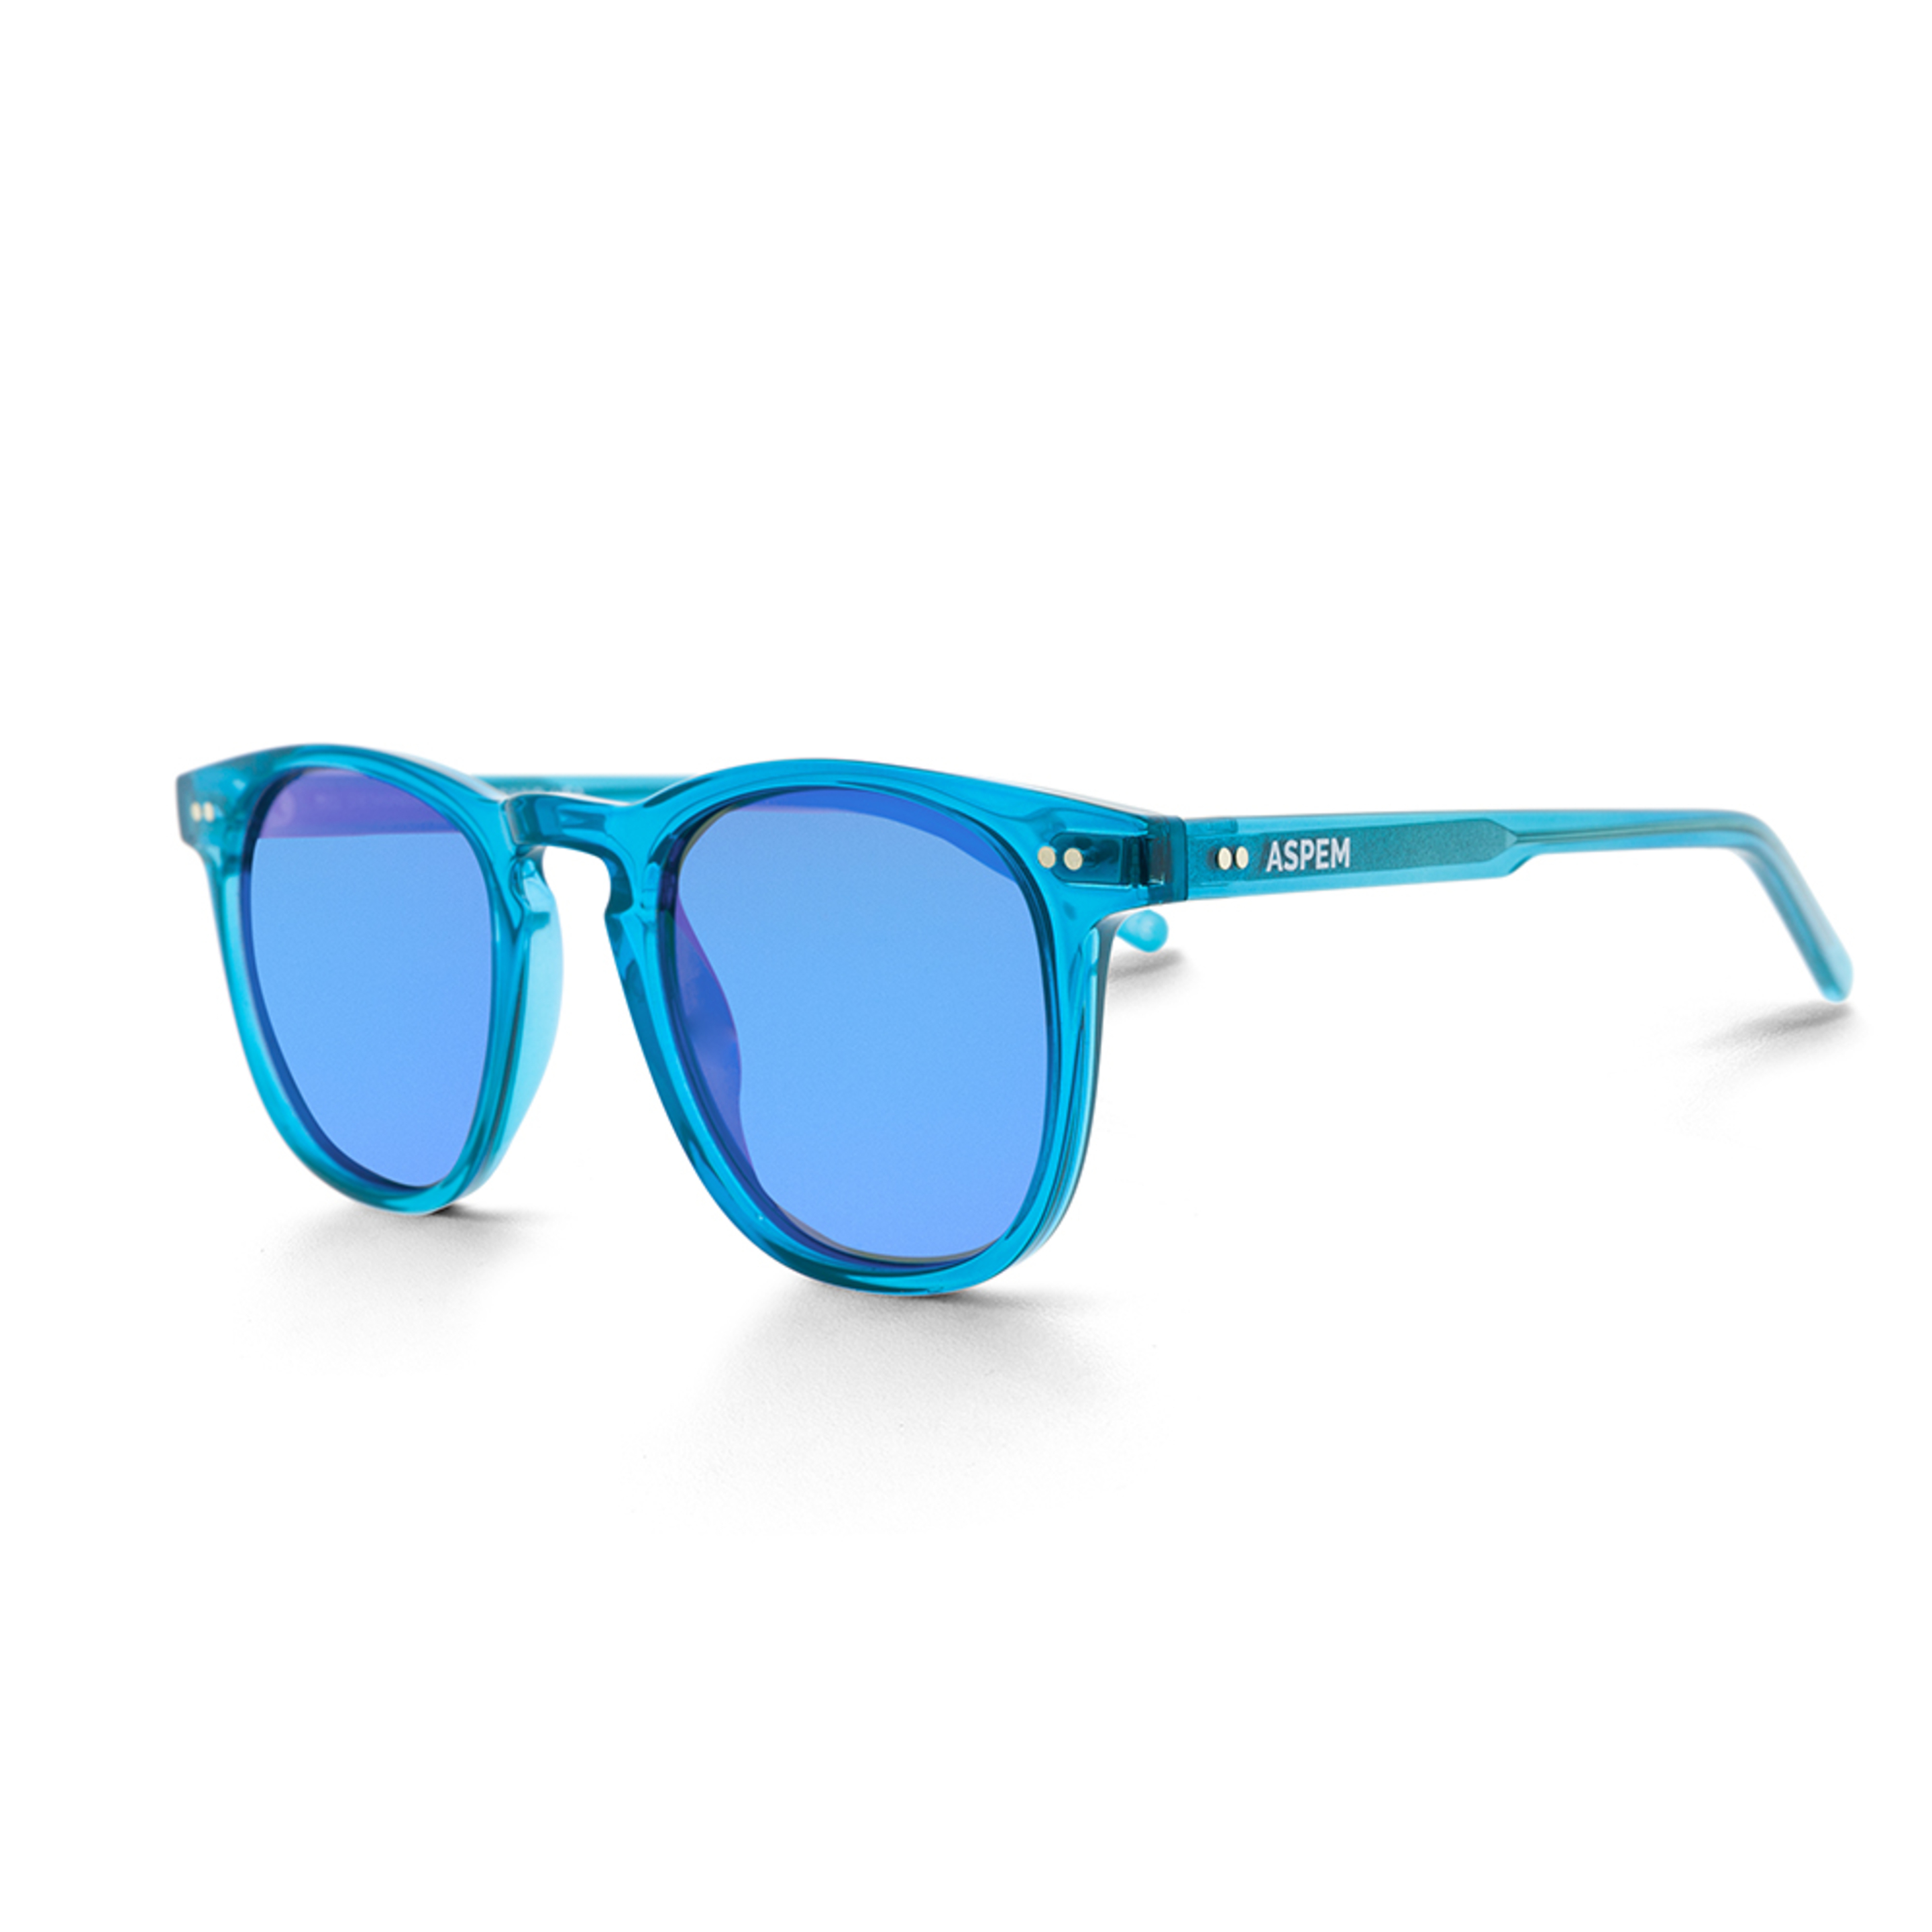 Gafas De Sol Aspem Custer - azul-turquesa - 